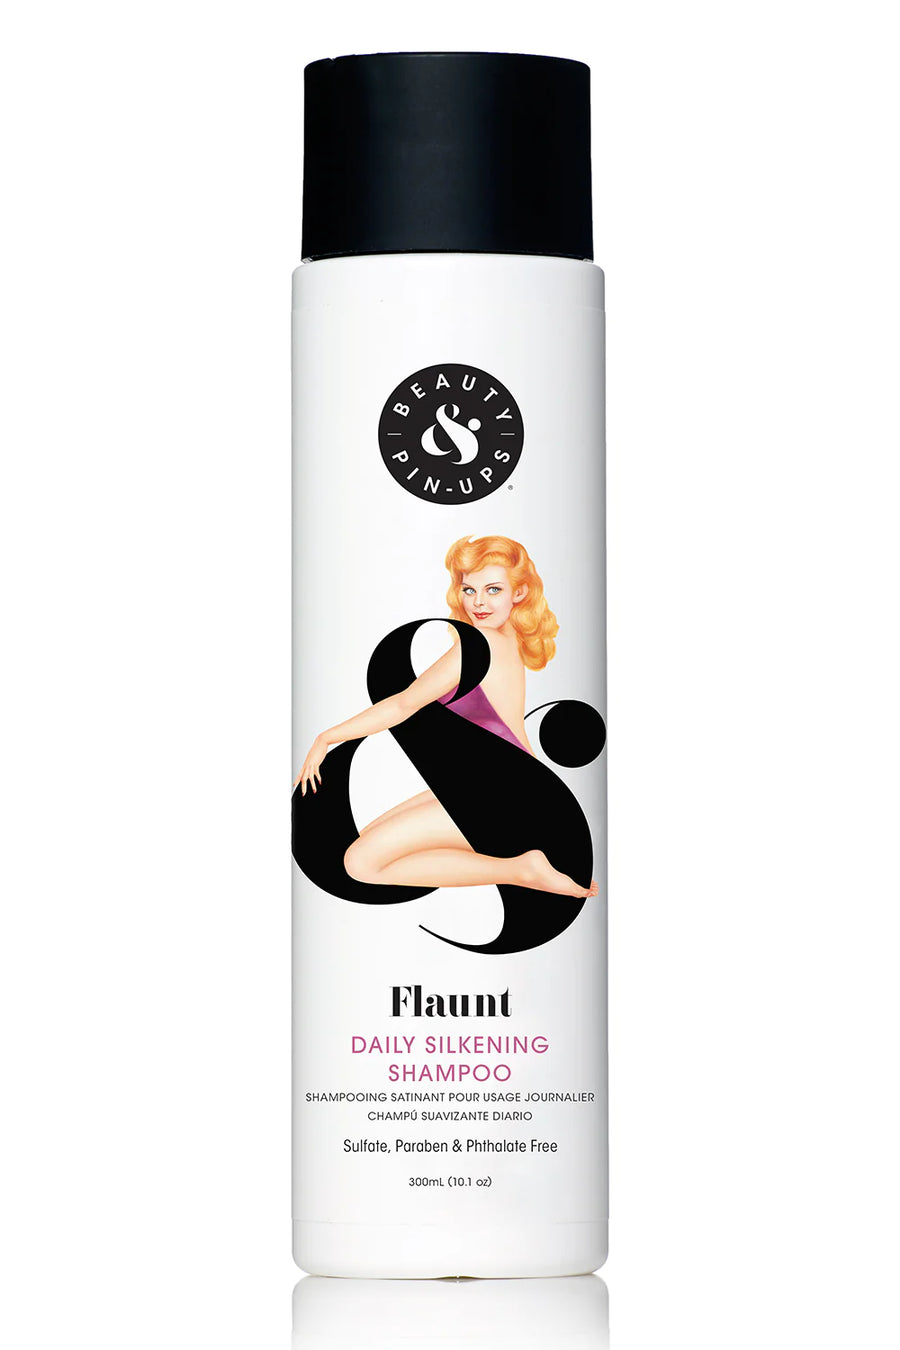 Beauty & Pin Ups Silkening Shampoo image of 10.1 oz bottle